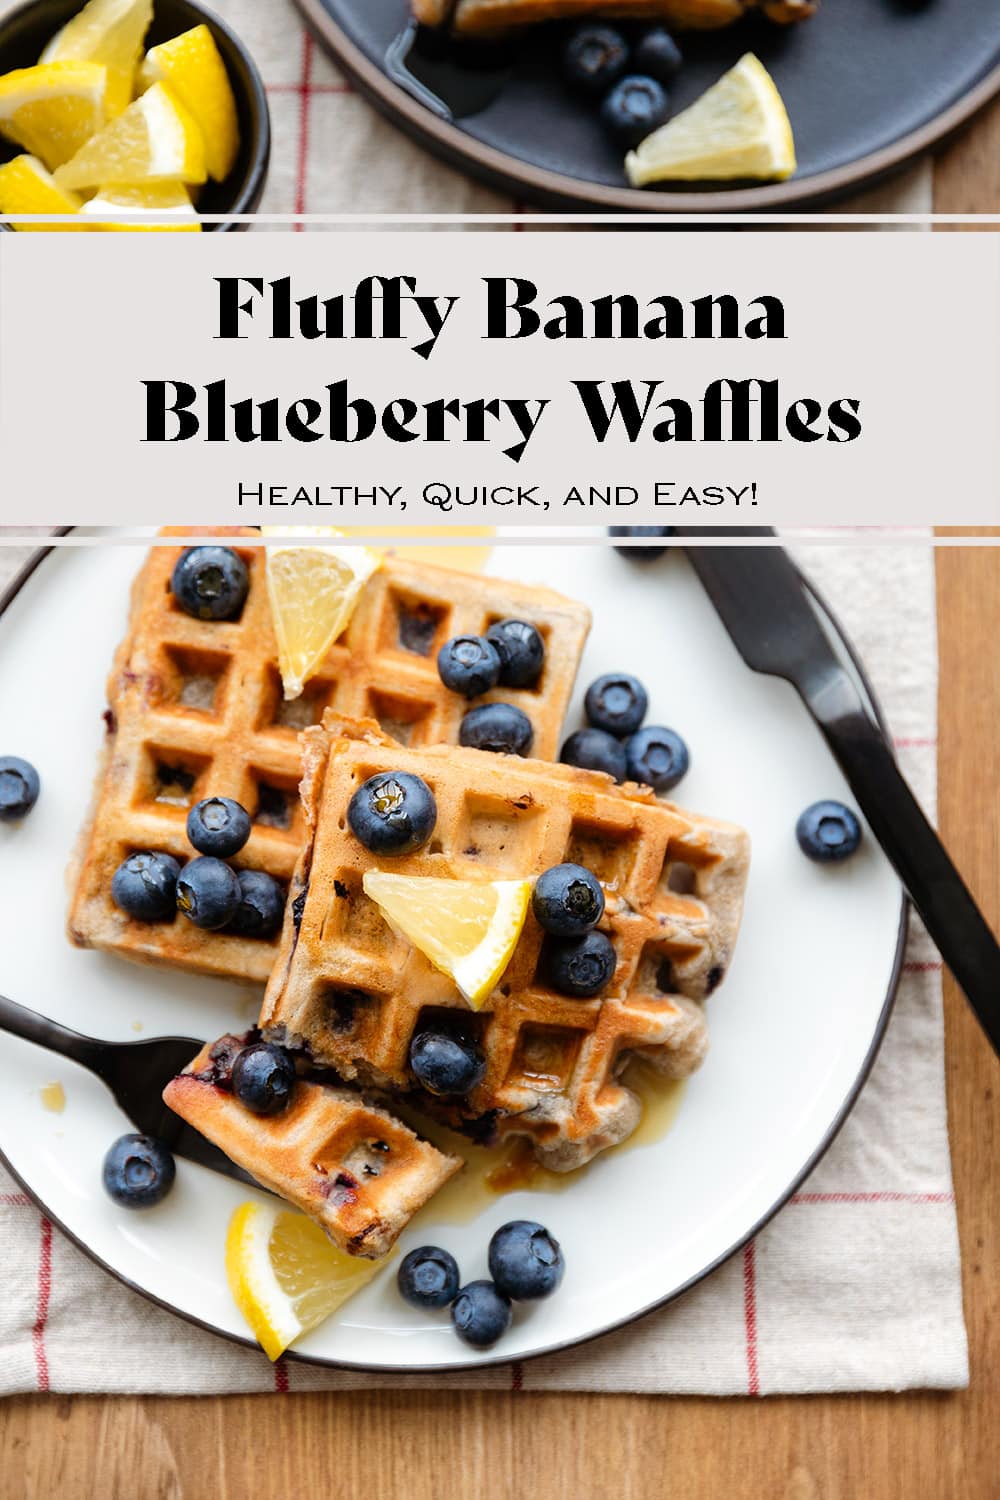 Banana Blueberry Waffles